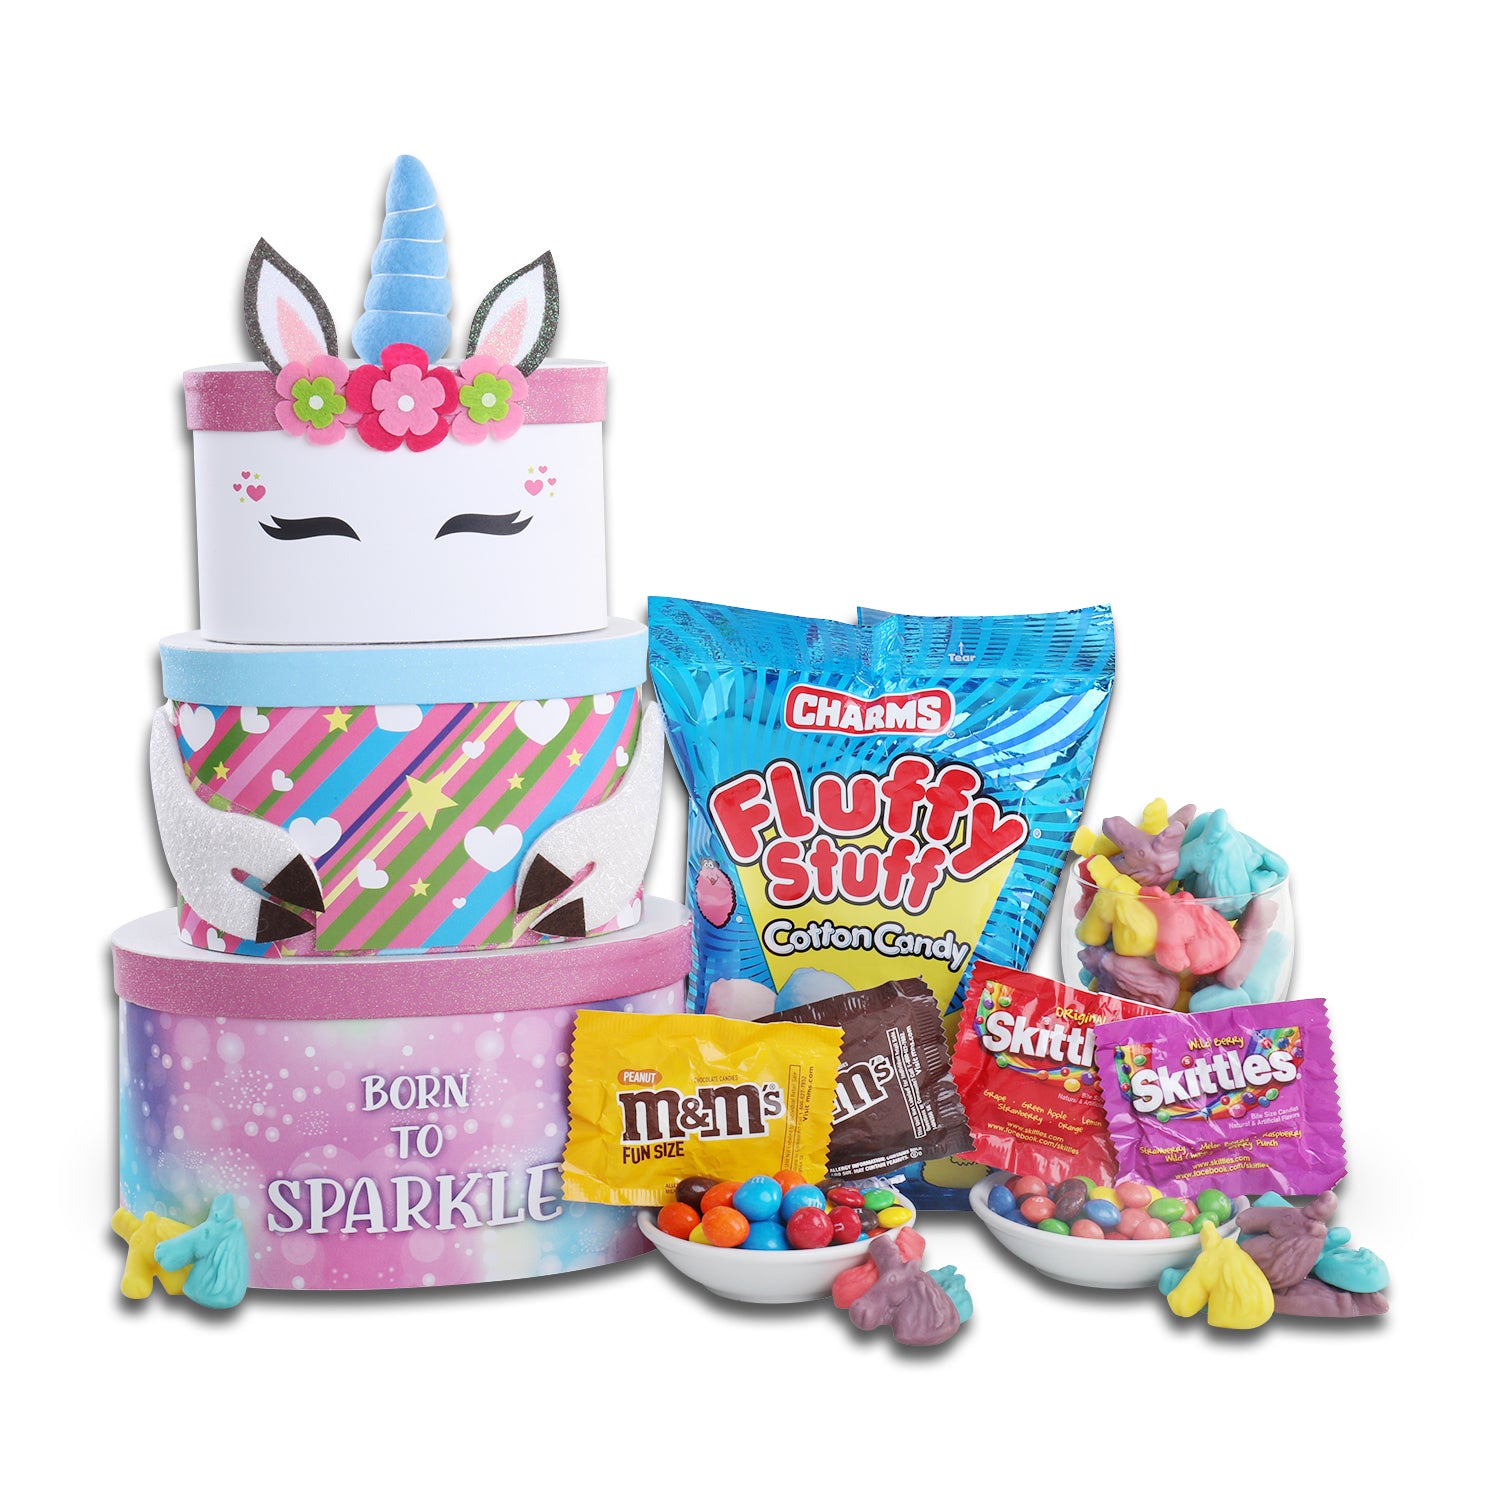 Charms Fluff Unicorn Cotton Candy (2.1oz.), M&M Peanut Fun Size(1 bag), M&M Plain Fun Size (1 bag), Skittles Original Fun Size (1 Bag), Skittles Wild Berry Fun Size (1 Bag), Unicorn Gummies (3.5oz), Unicorn "Born to Sparkle" 3 High Tower   